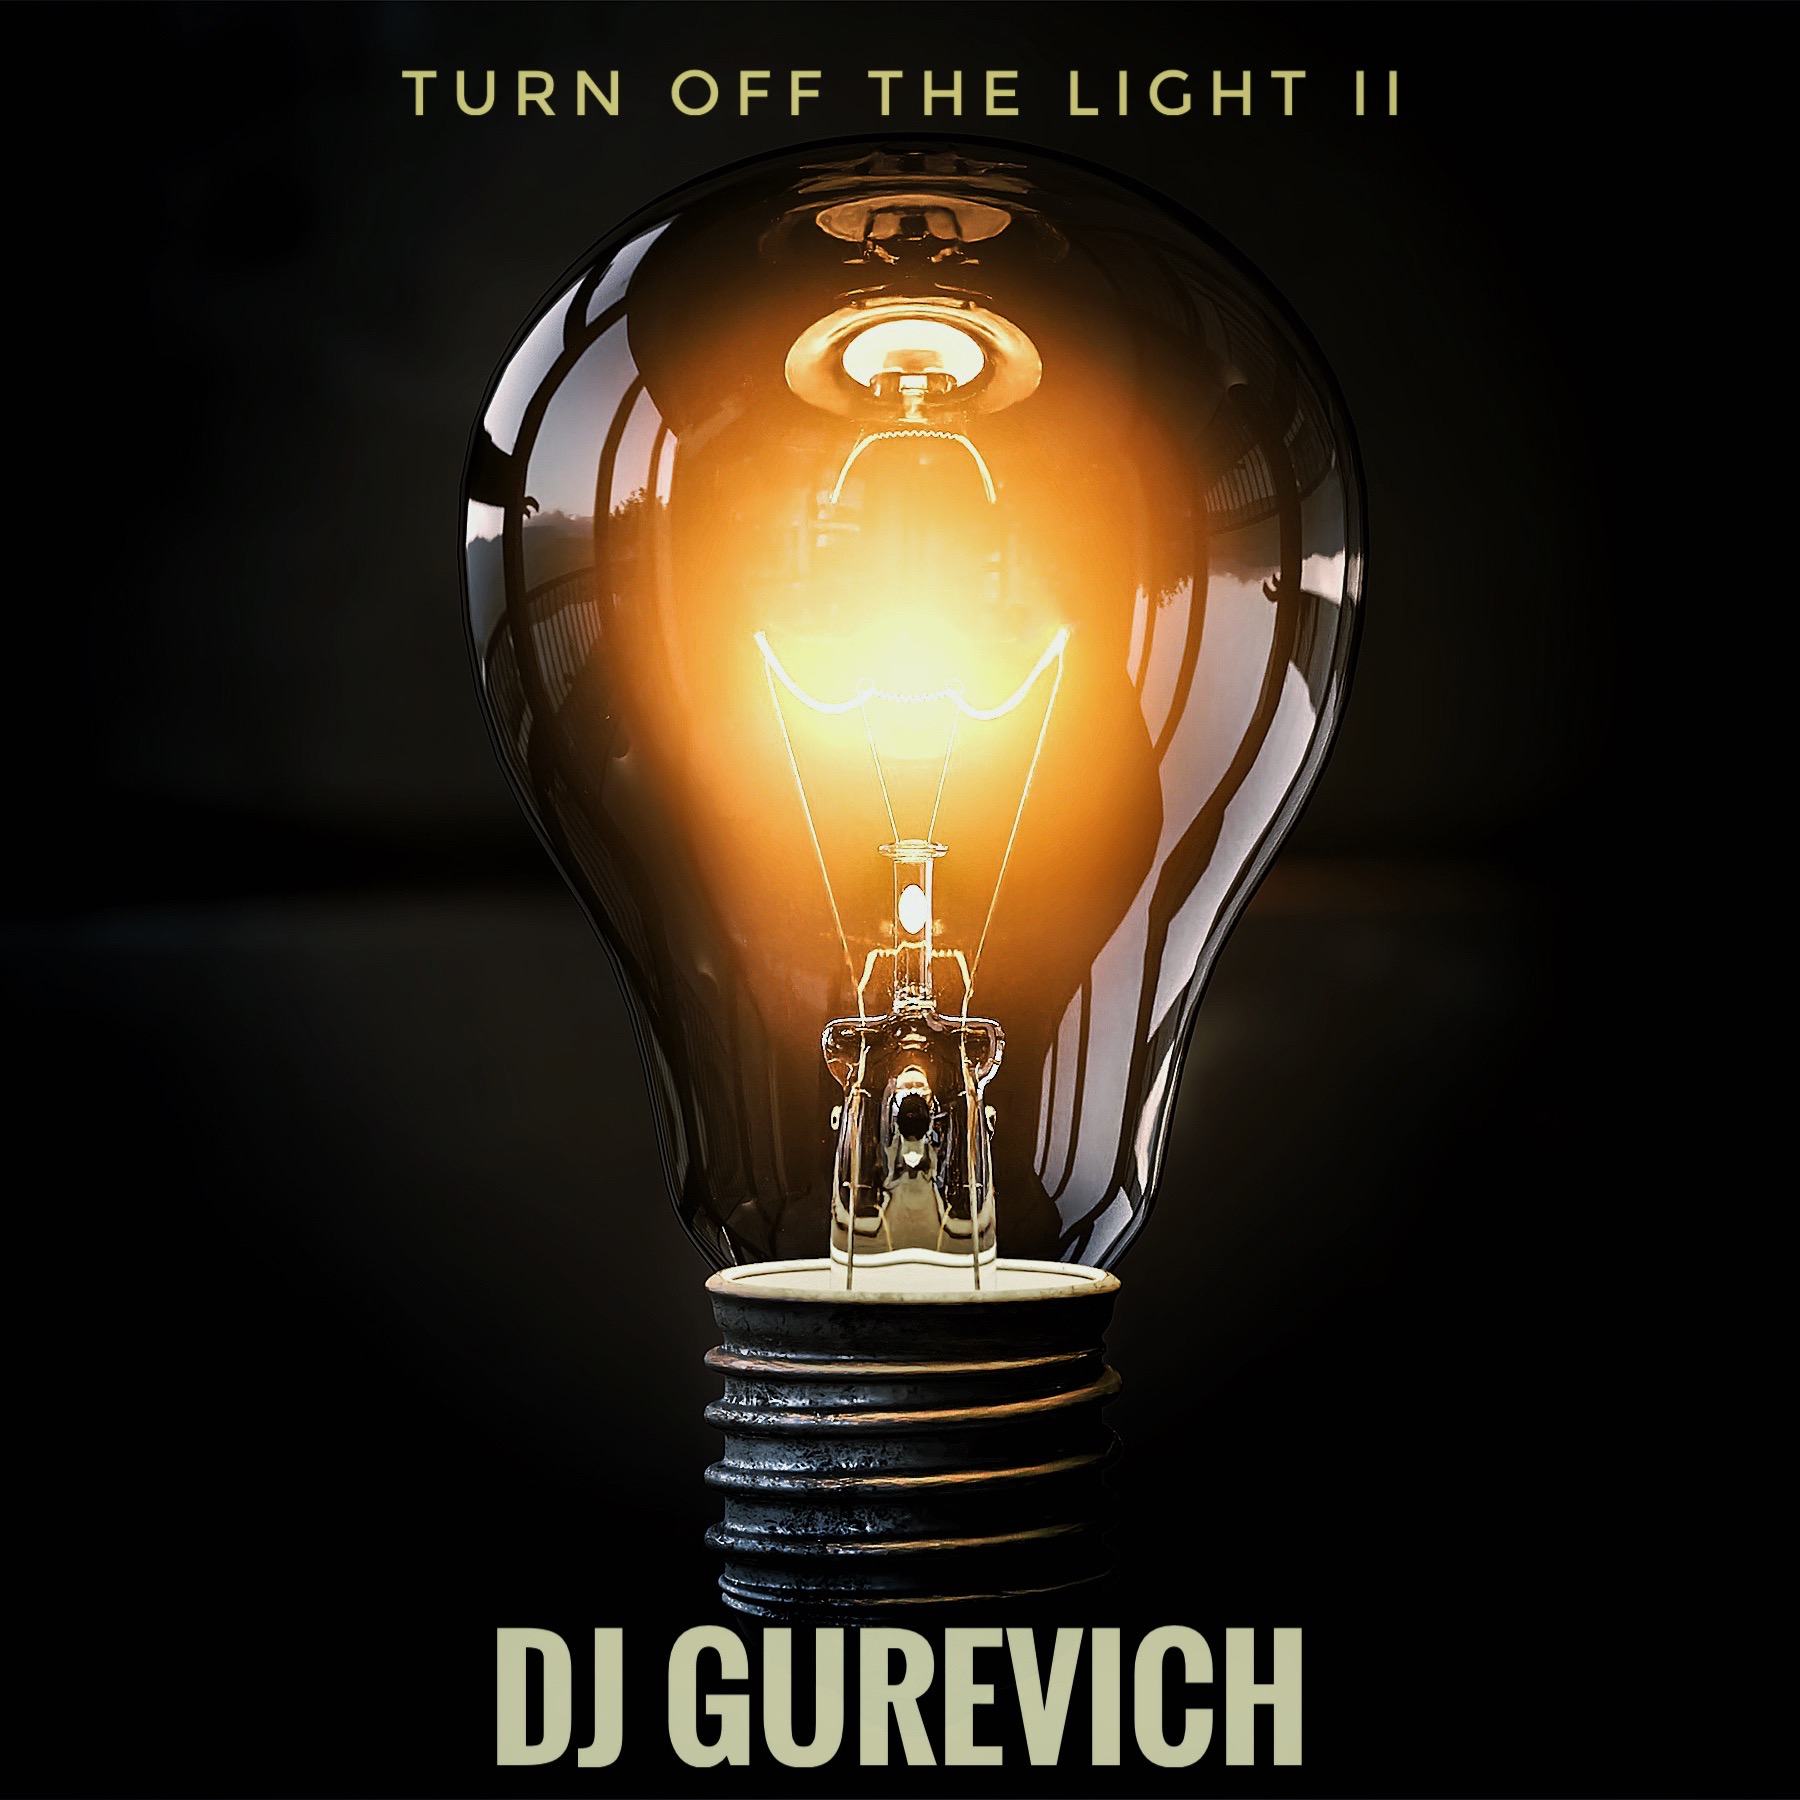 Aflaai Dj Gurevich - Turn off light II